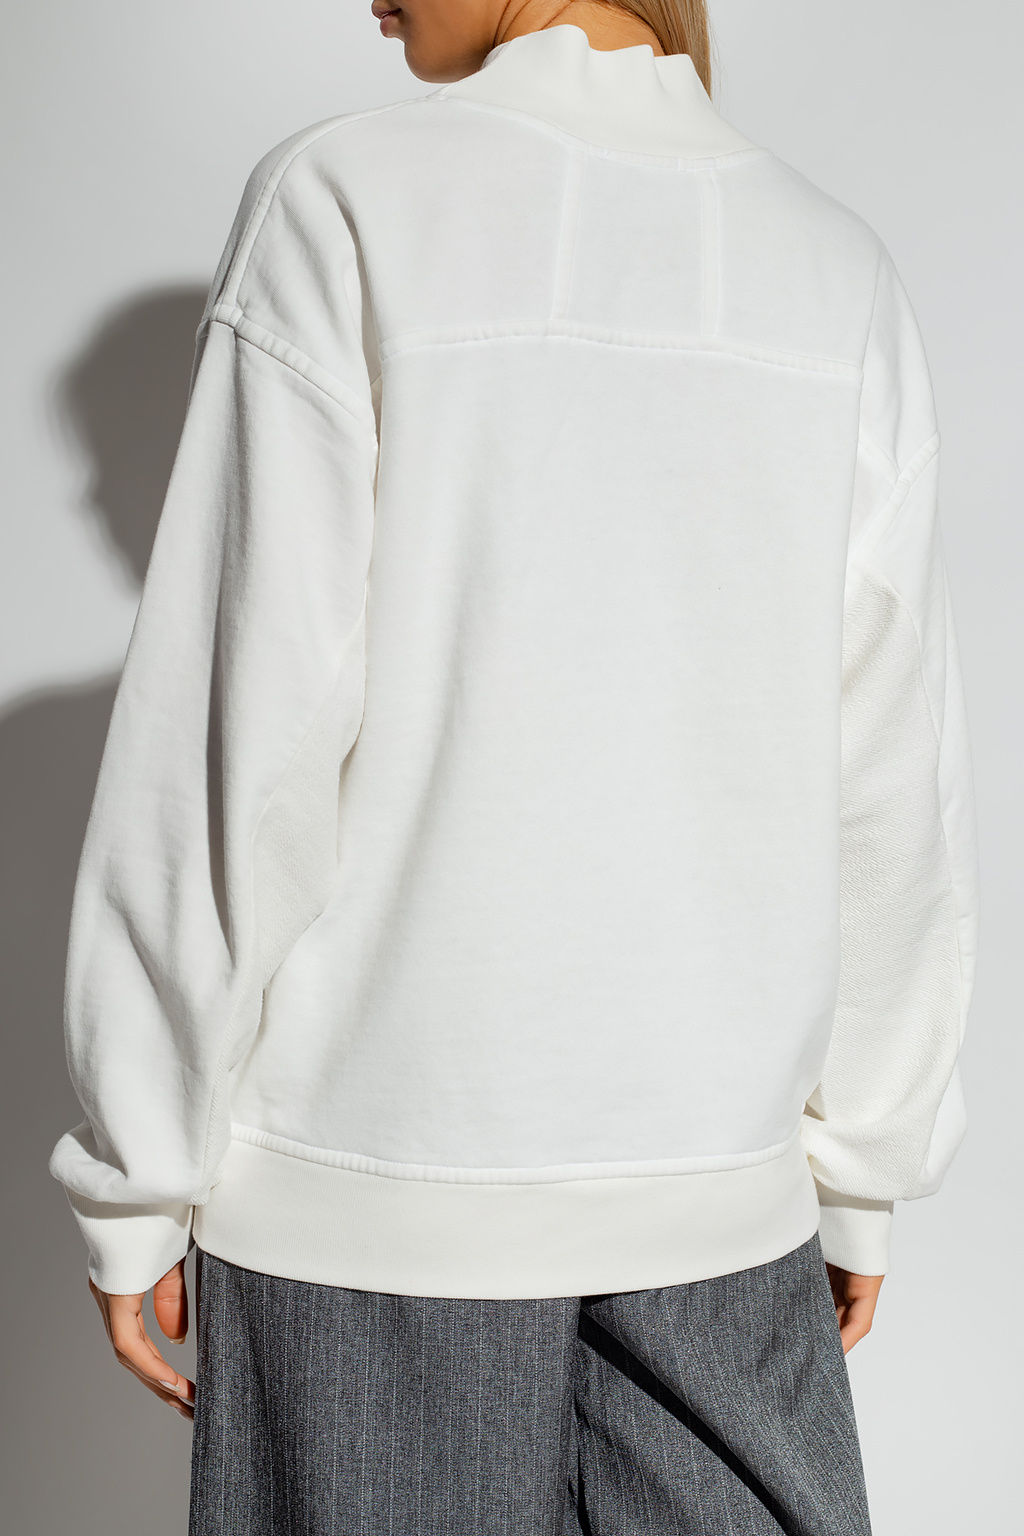 Rhude Loose-fitting sweatshirt